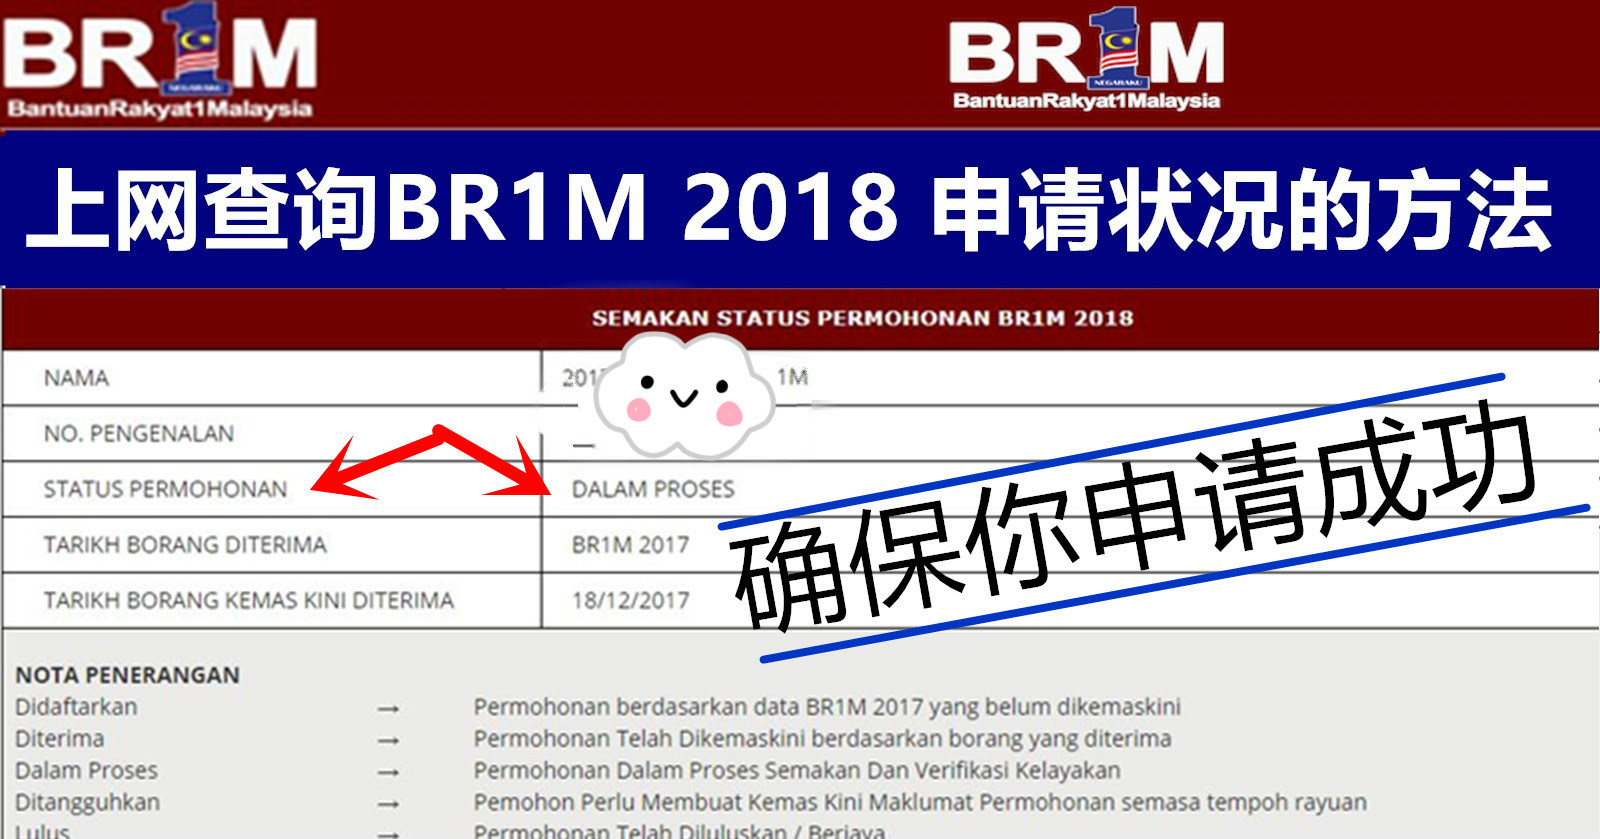 Br1m Check Status Permohonan - Modif D